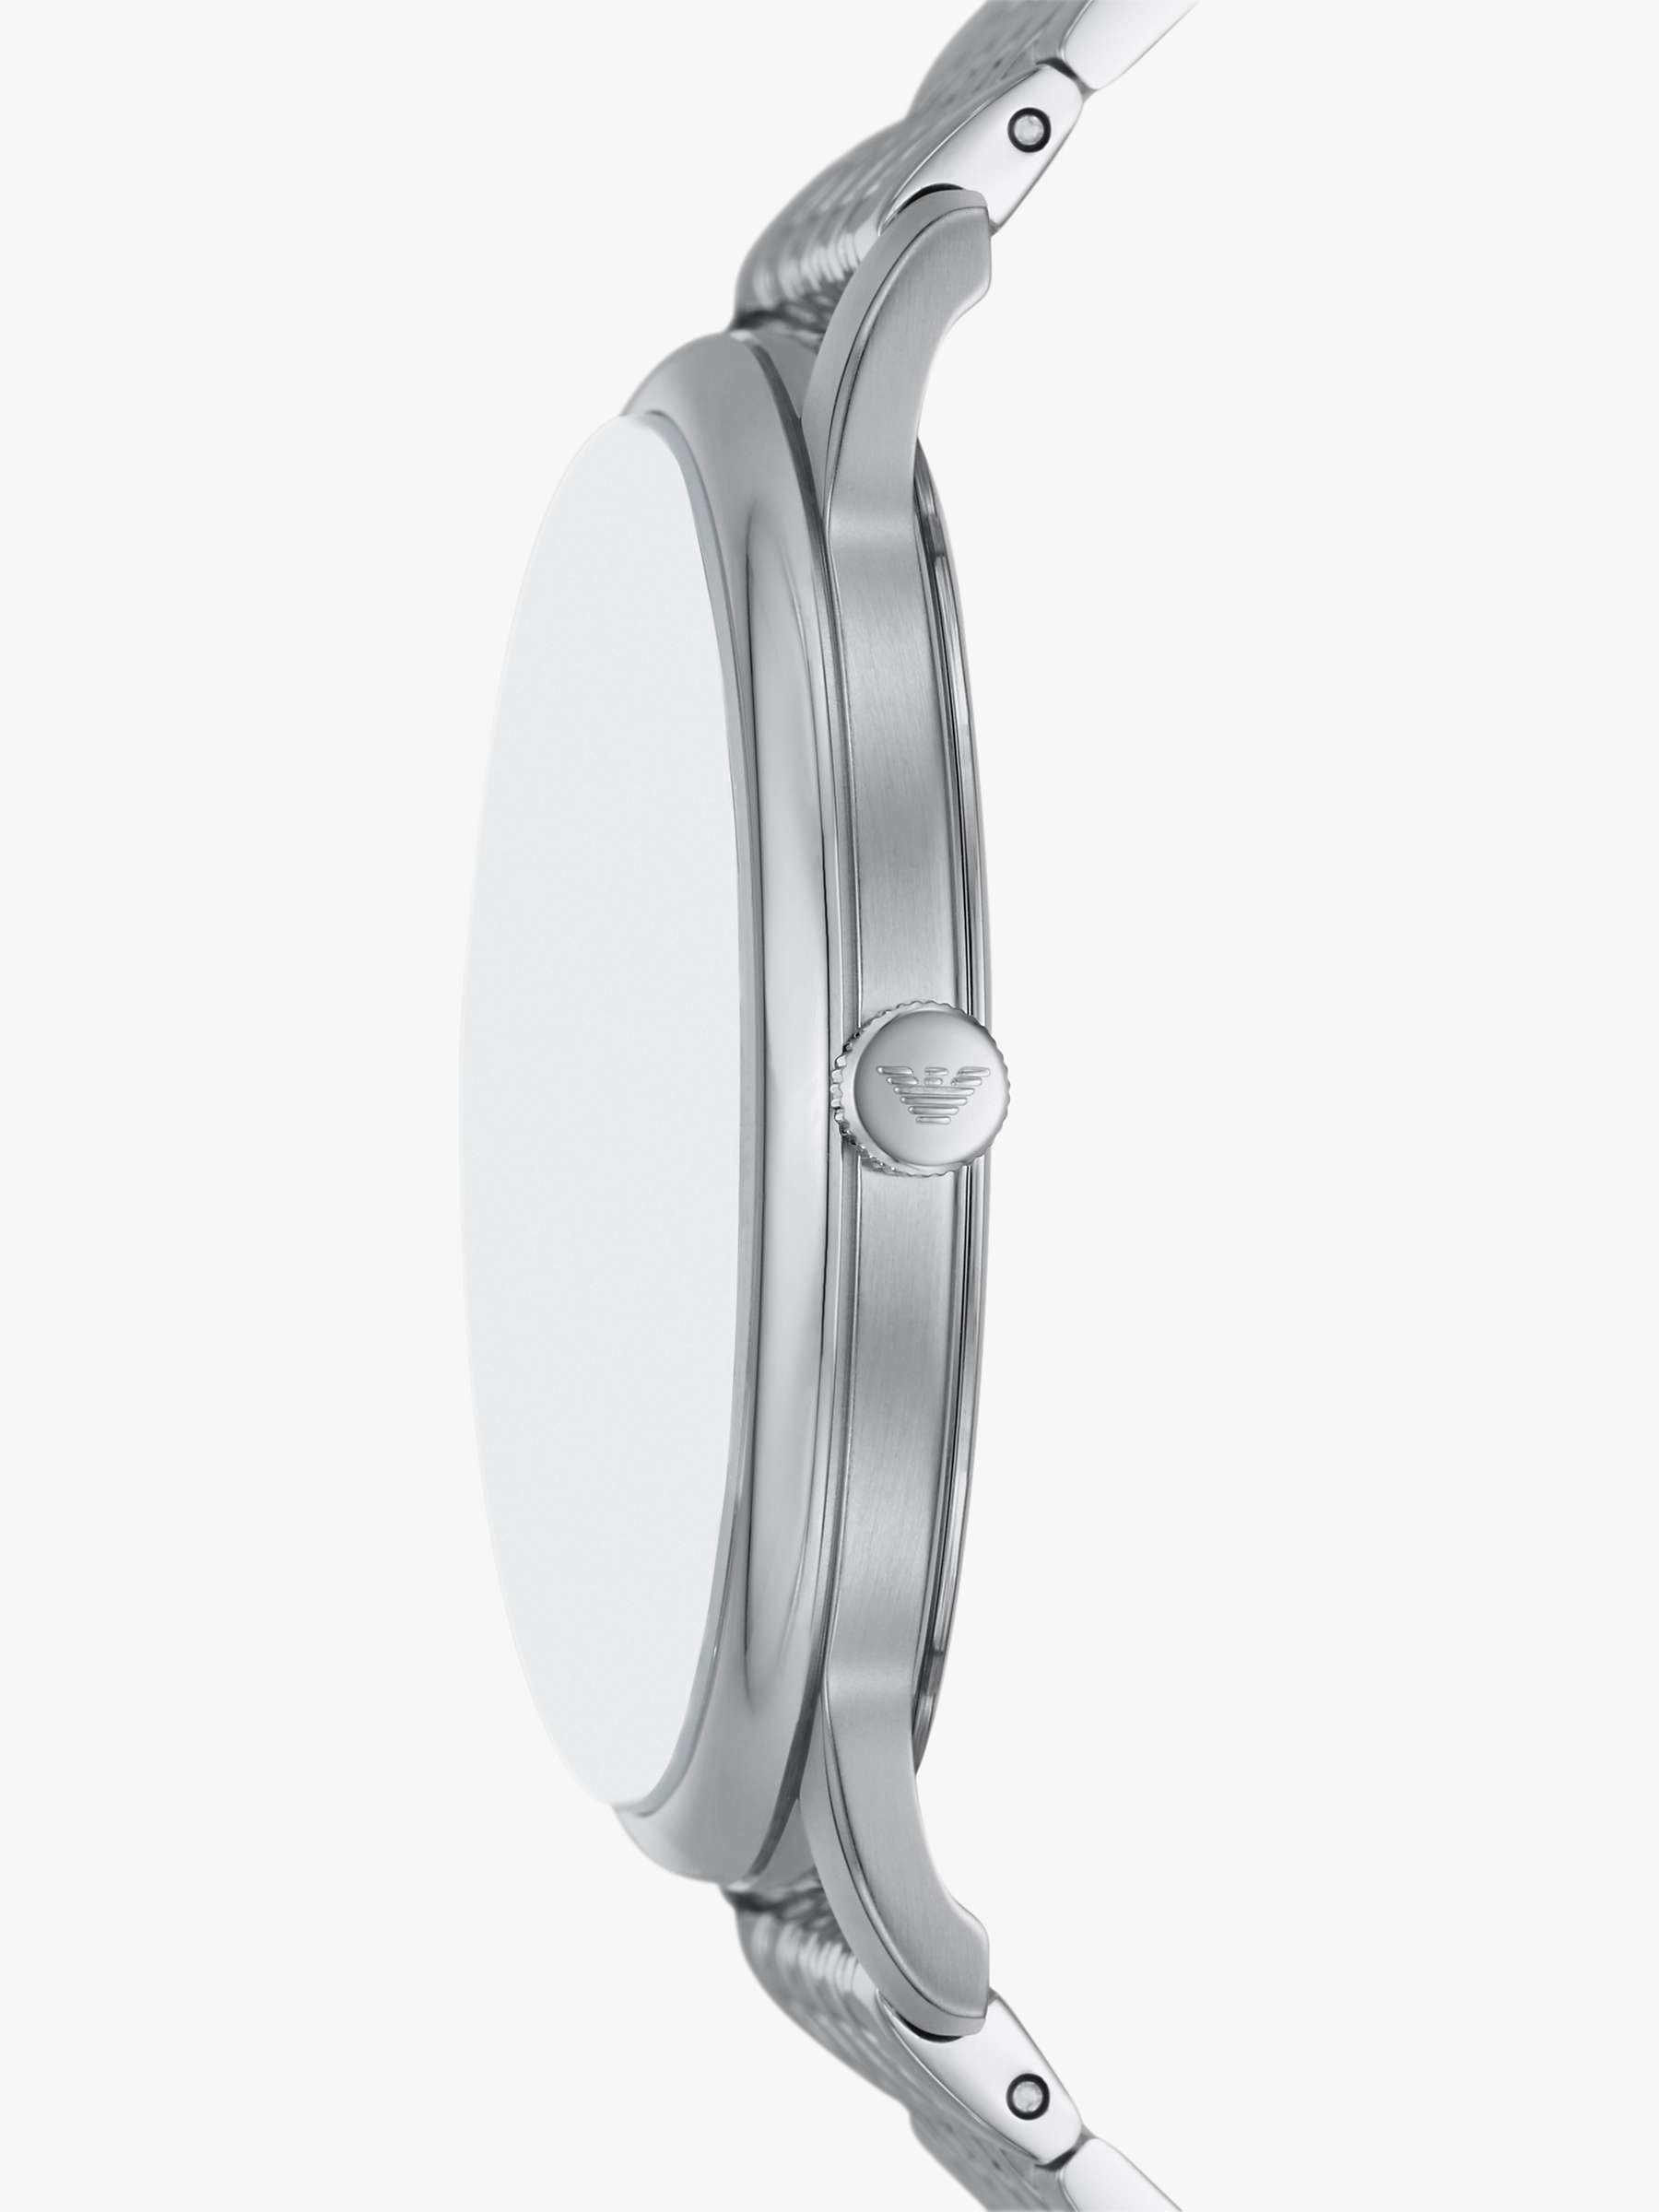 Buy Emporio Armani Men's Sunray Dial Bracelet Strap Watch Online at johnlewis.com